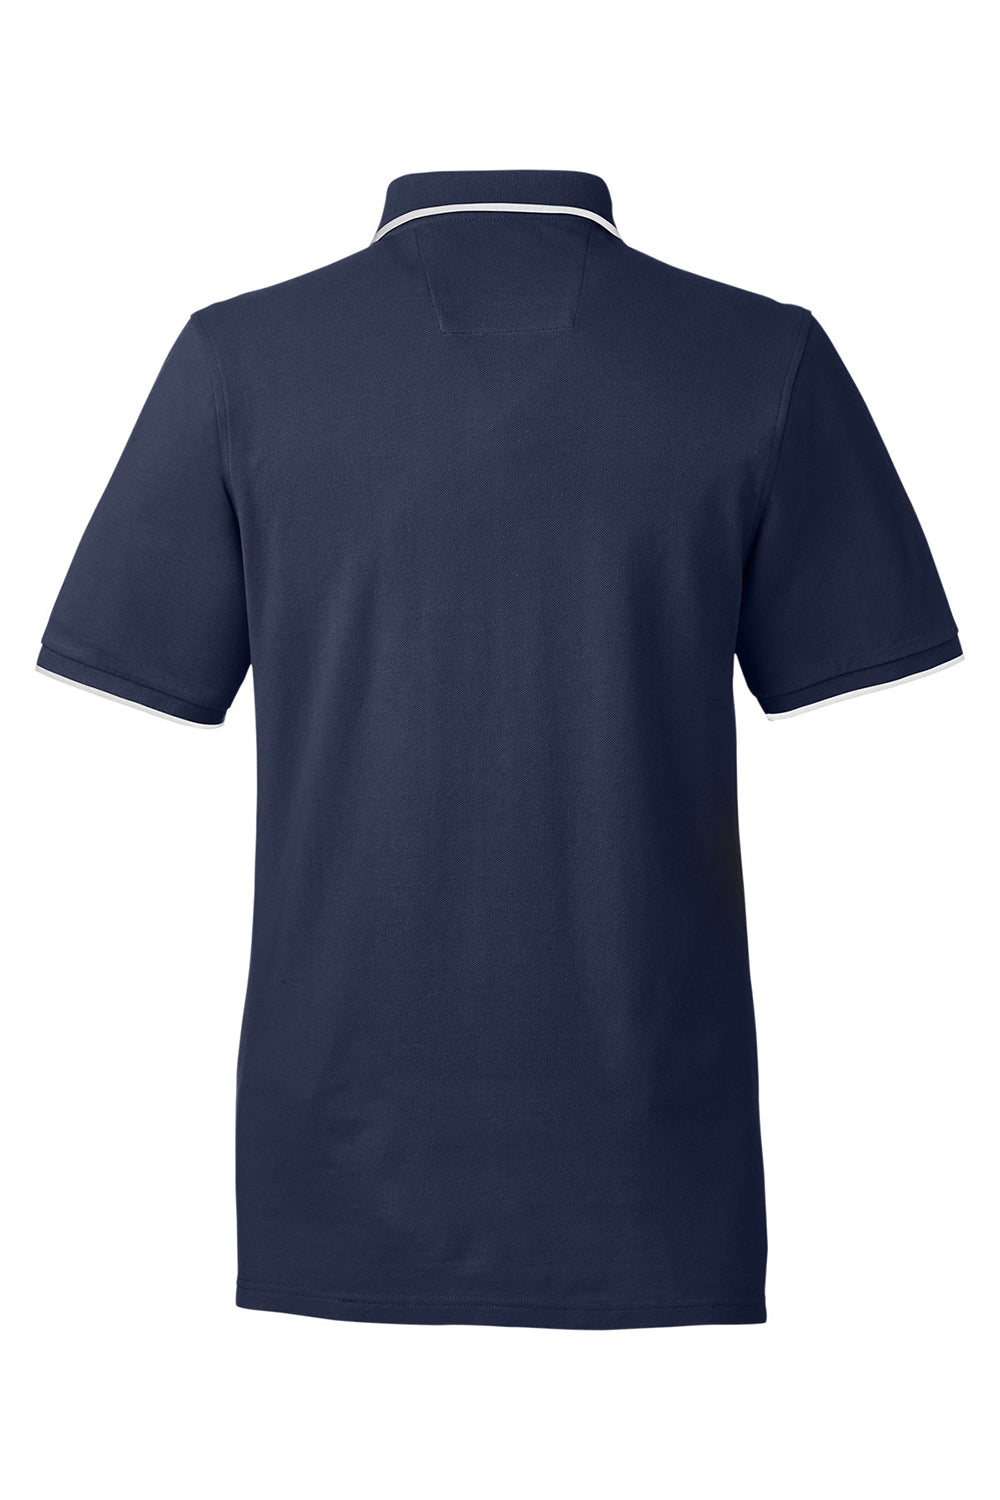 Nautica N17165 Mens Desk Short Sleeve Polo Shirt Navy Blue/White Flat Back